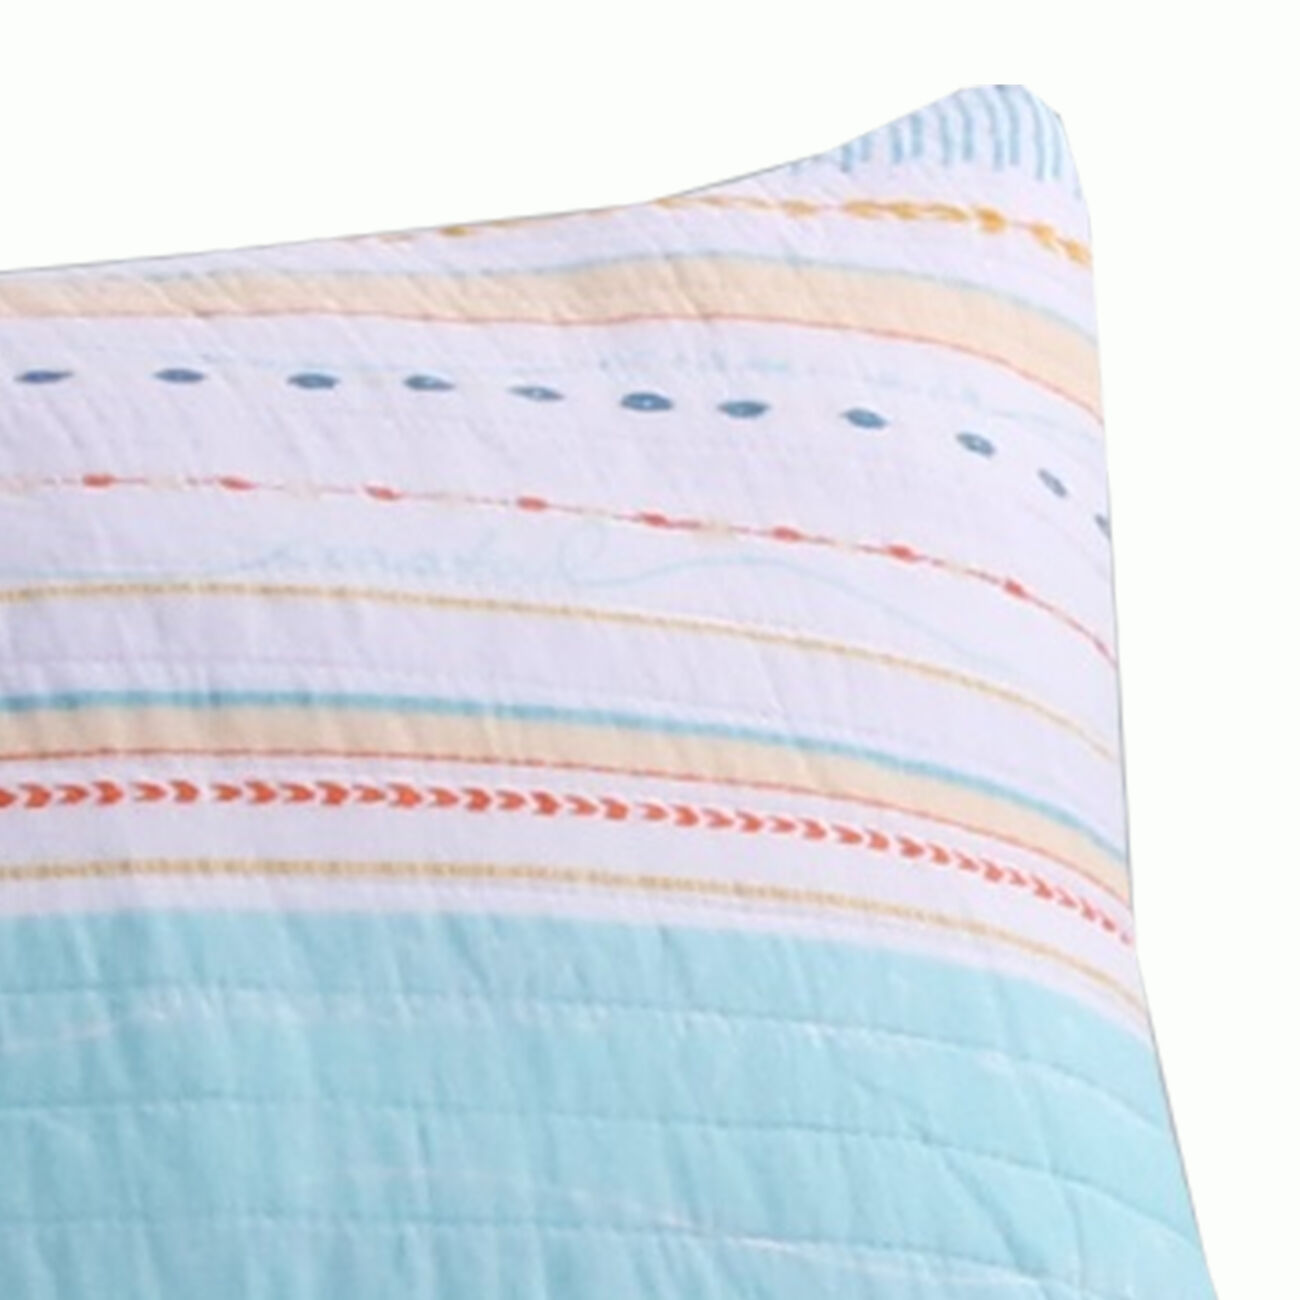 26 x 20 Inches Standard Size Pillow Sham with Stripe Print, Aqua Blue